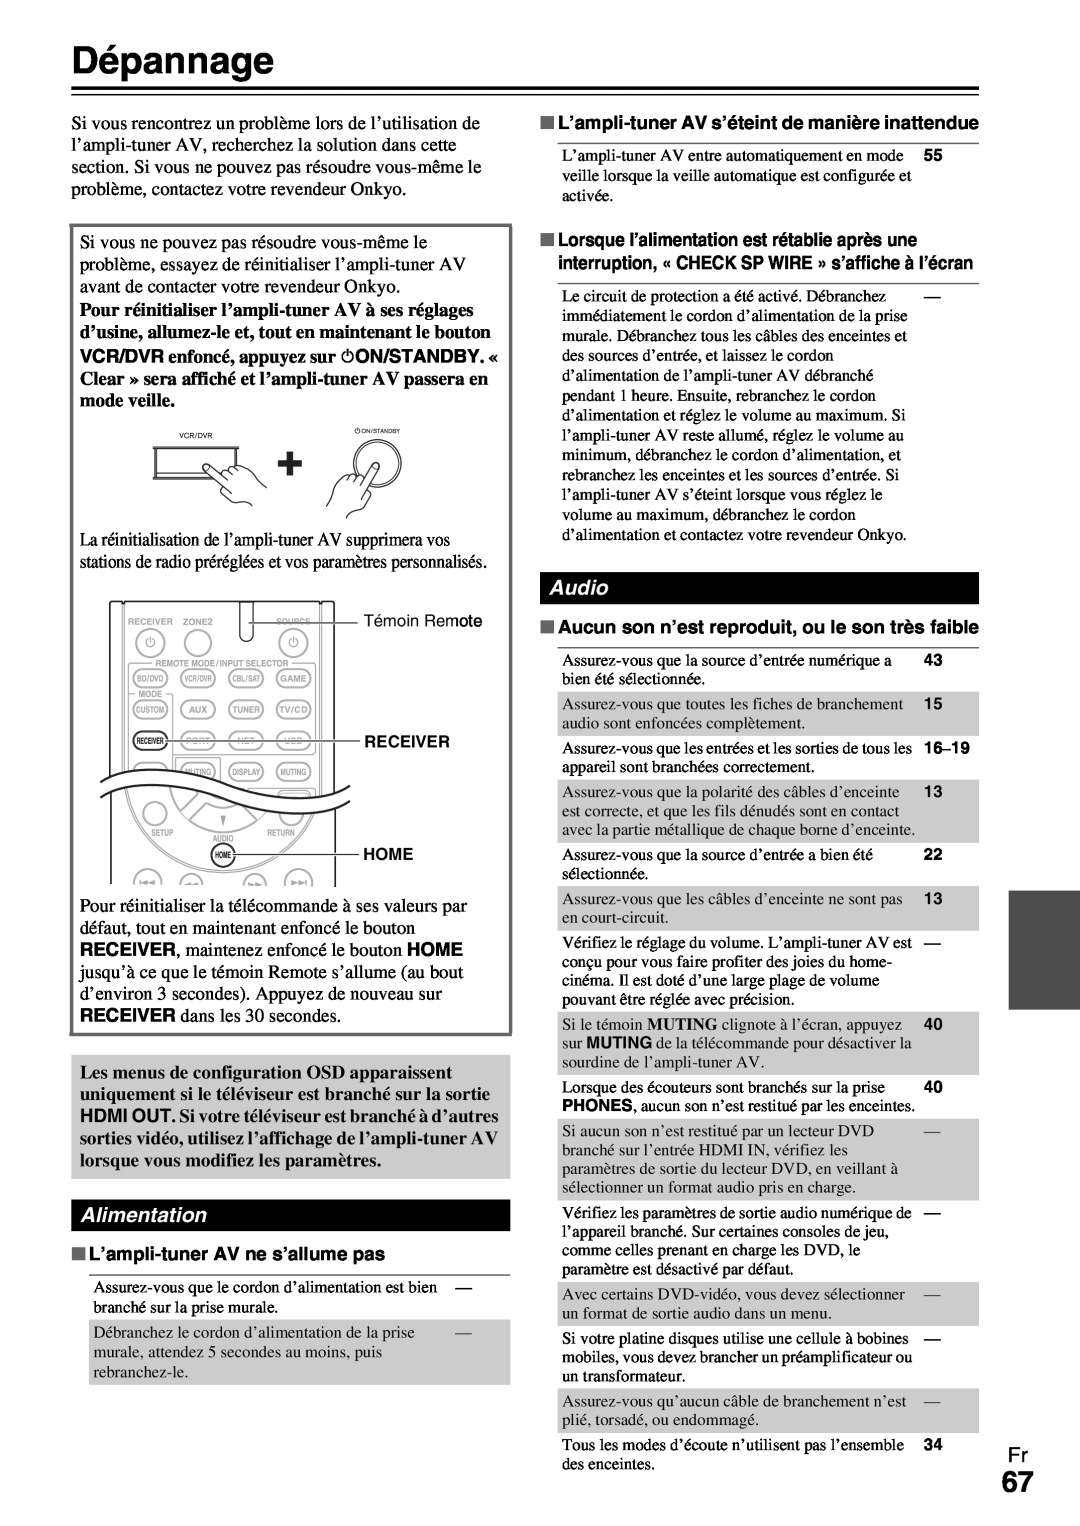 Onkyo HT-R990 instruction manual Dépannage, Alimentation, Audio, L’ampli-tunerAV ne s’allume pas 